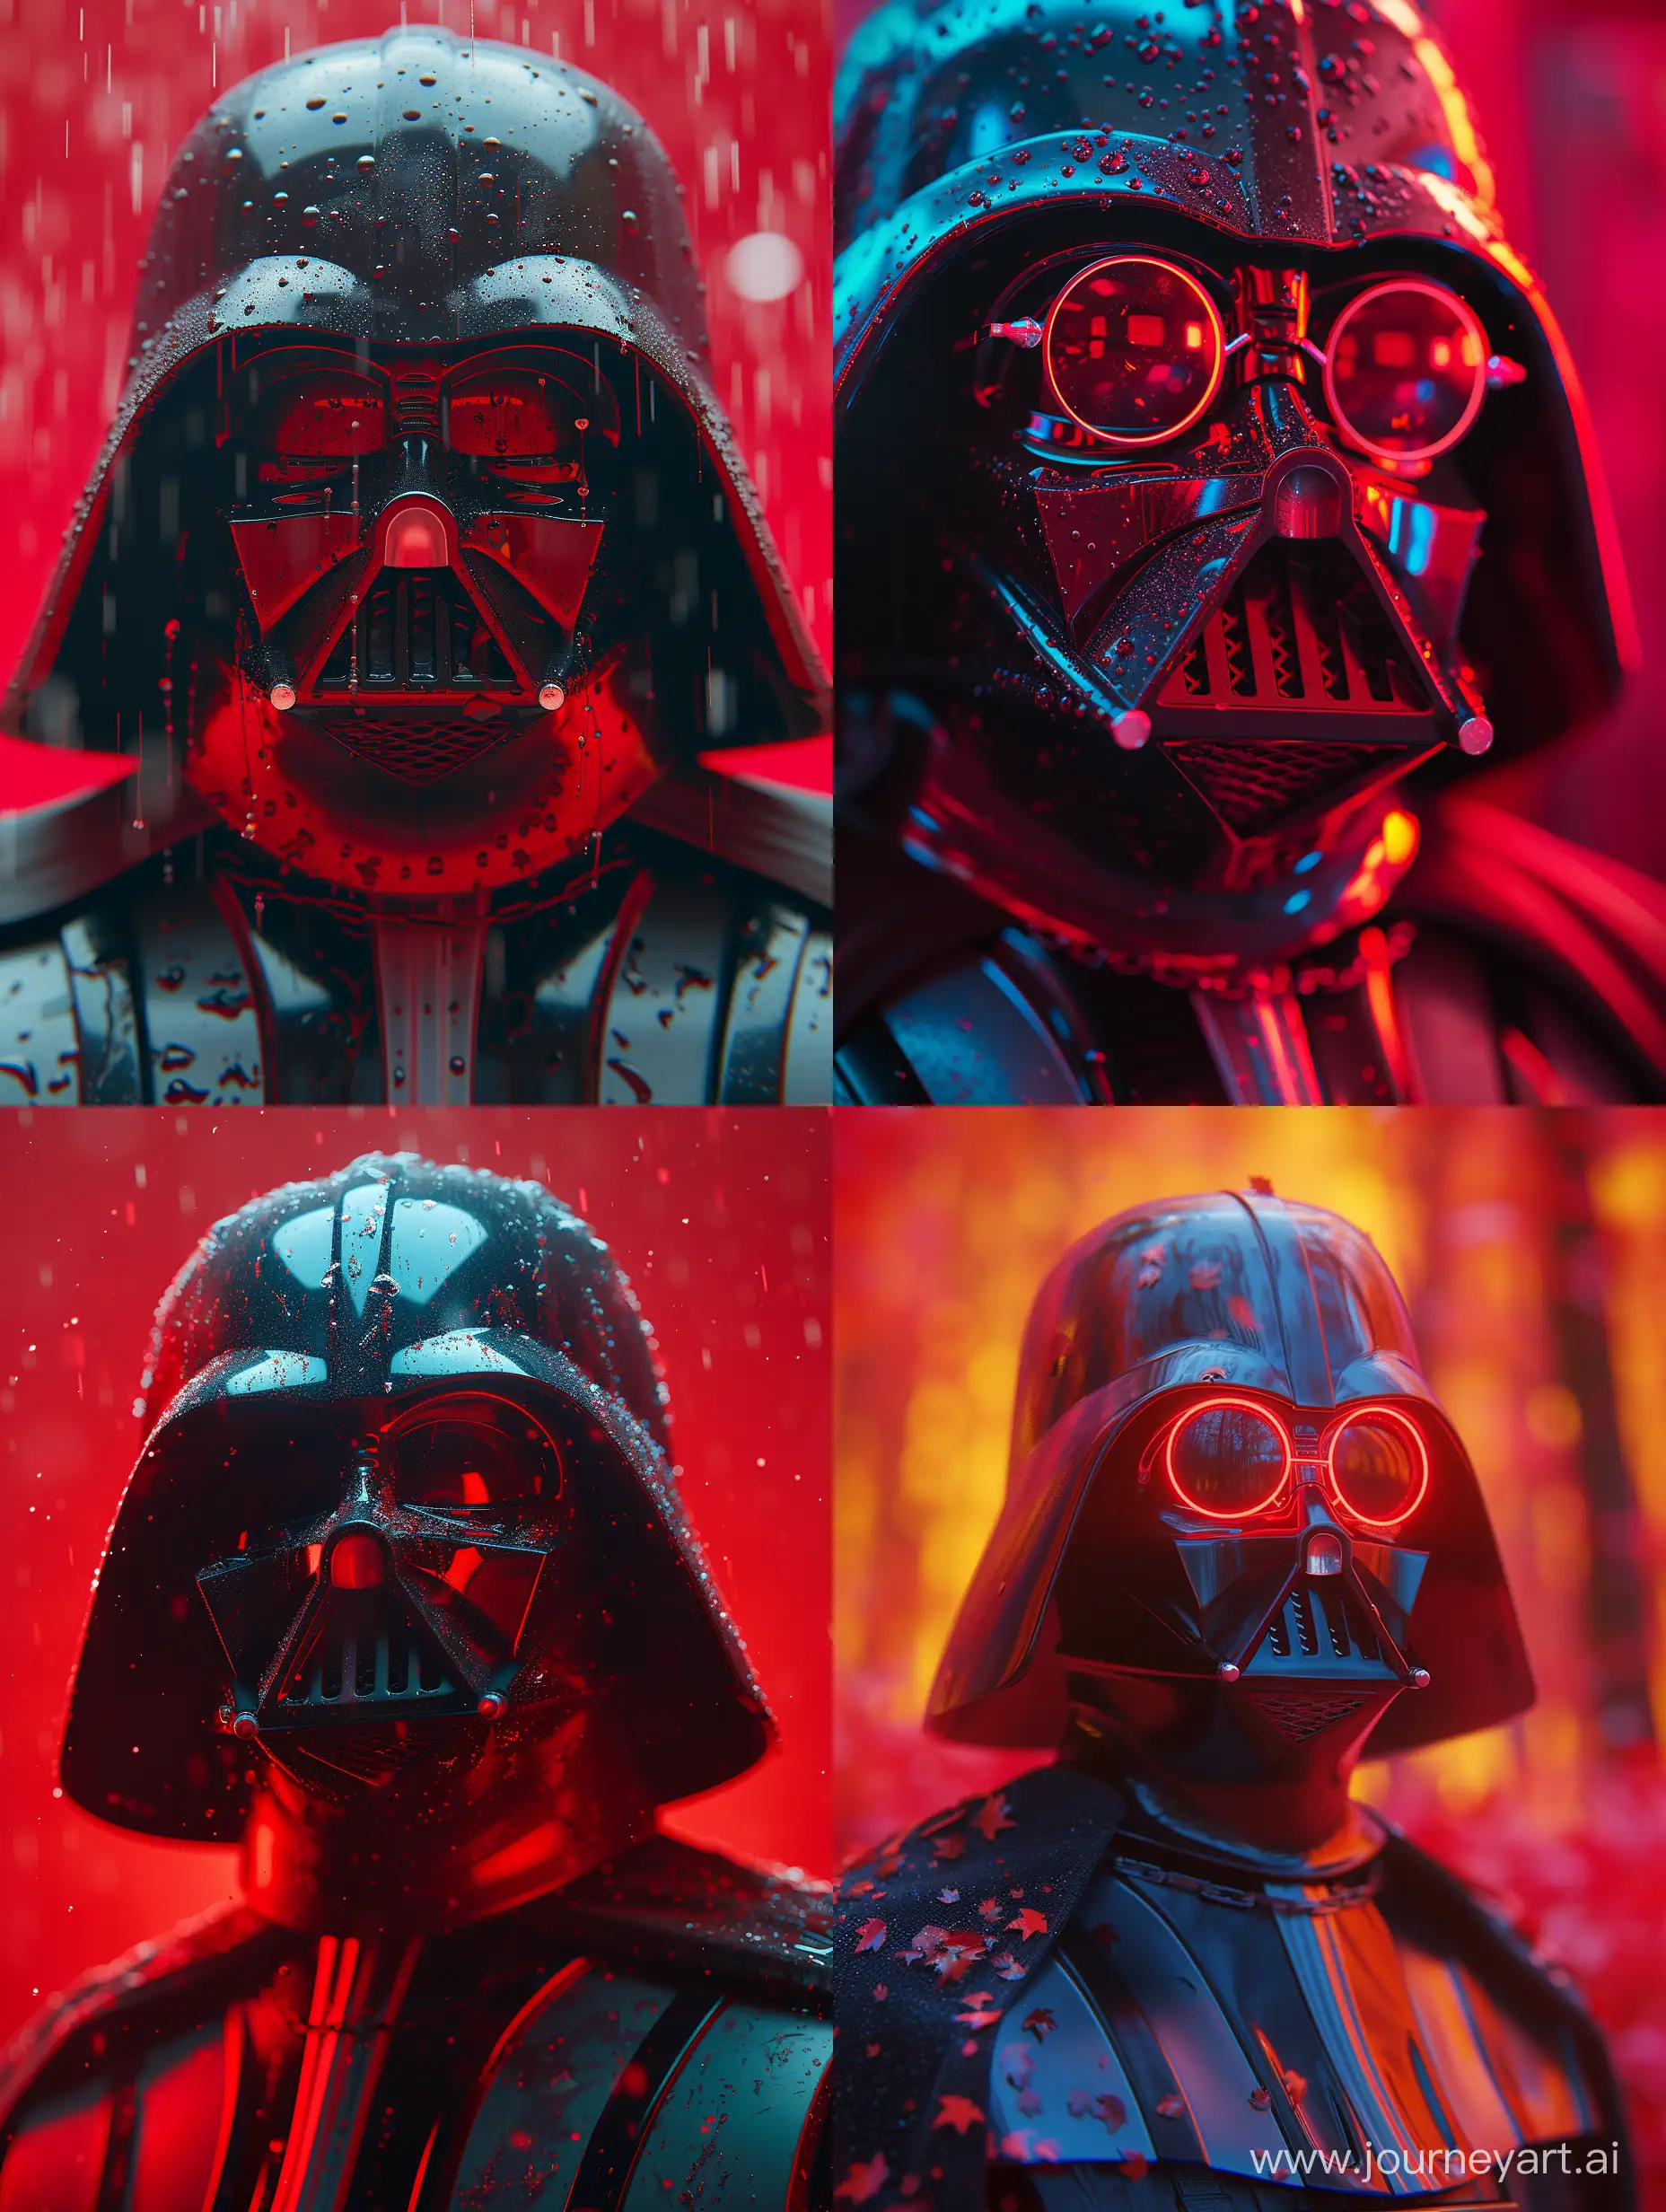 Intense-CloseUp-of-Darth-Vader-with-Dramatic-Neon-Lighting